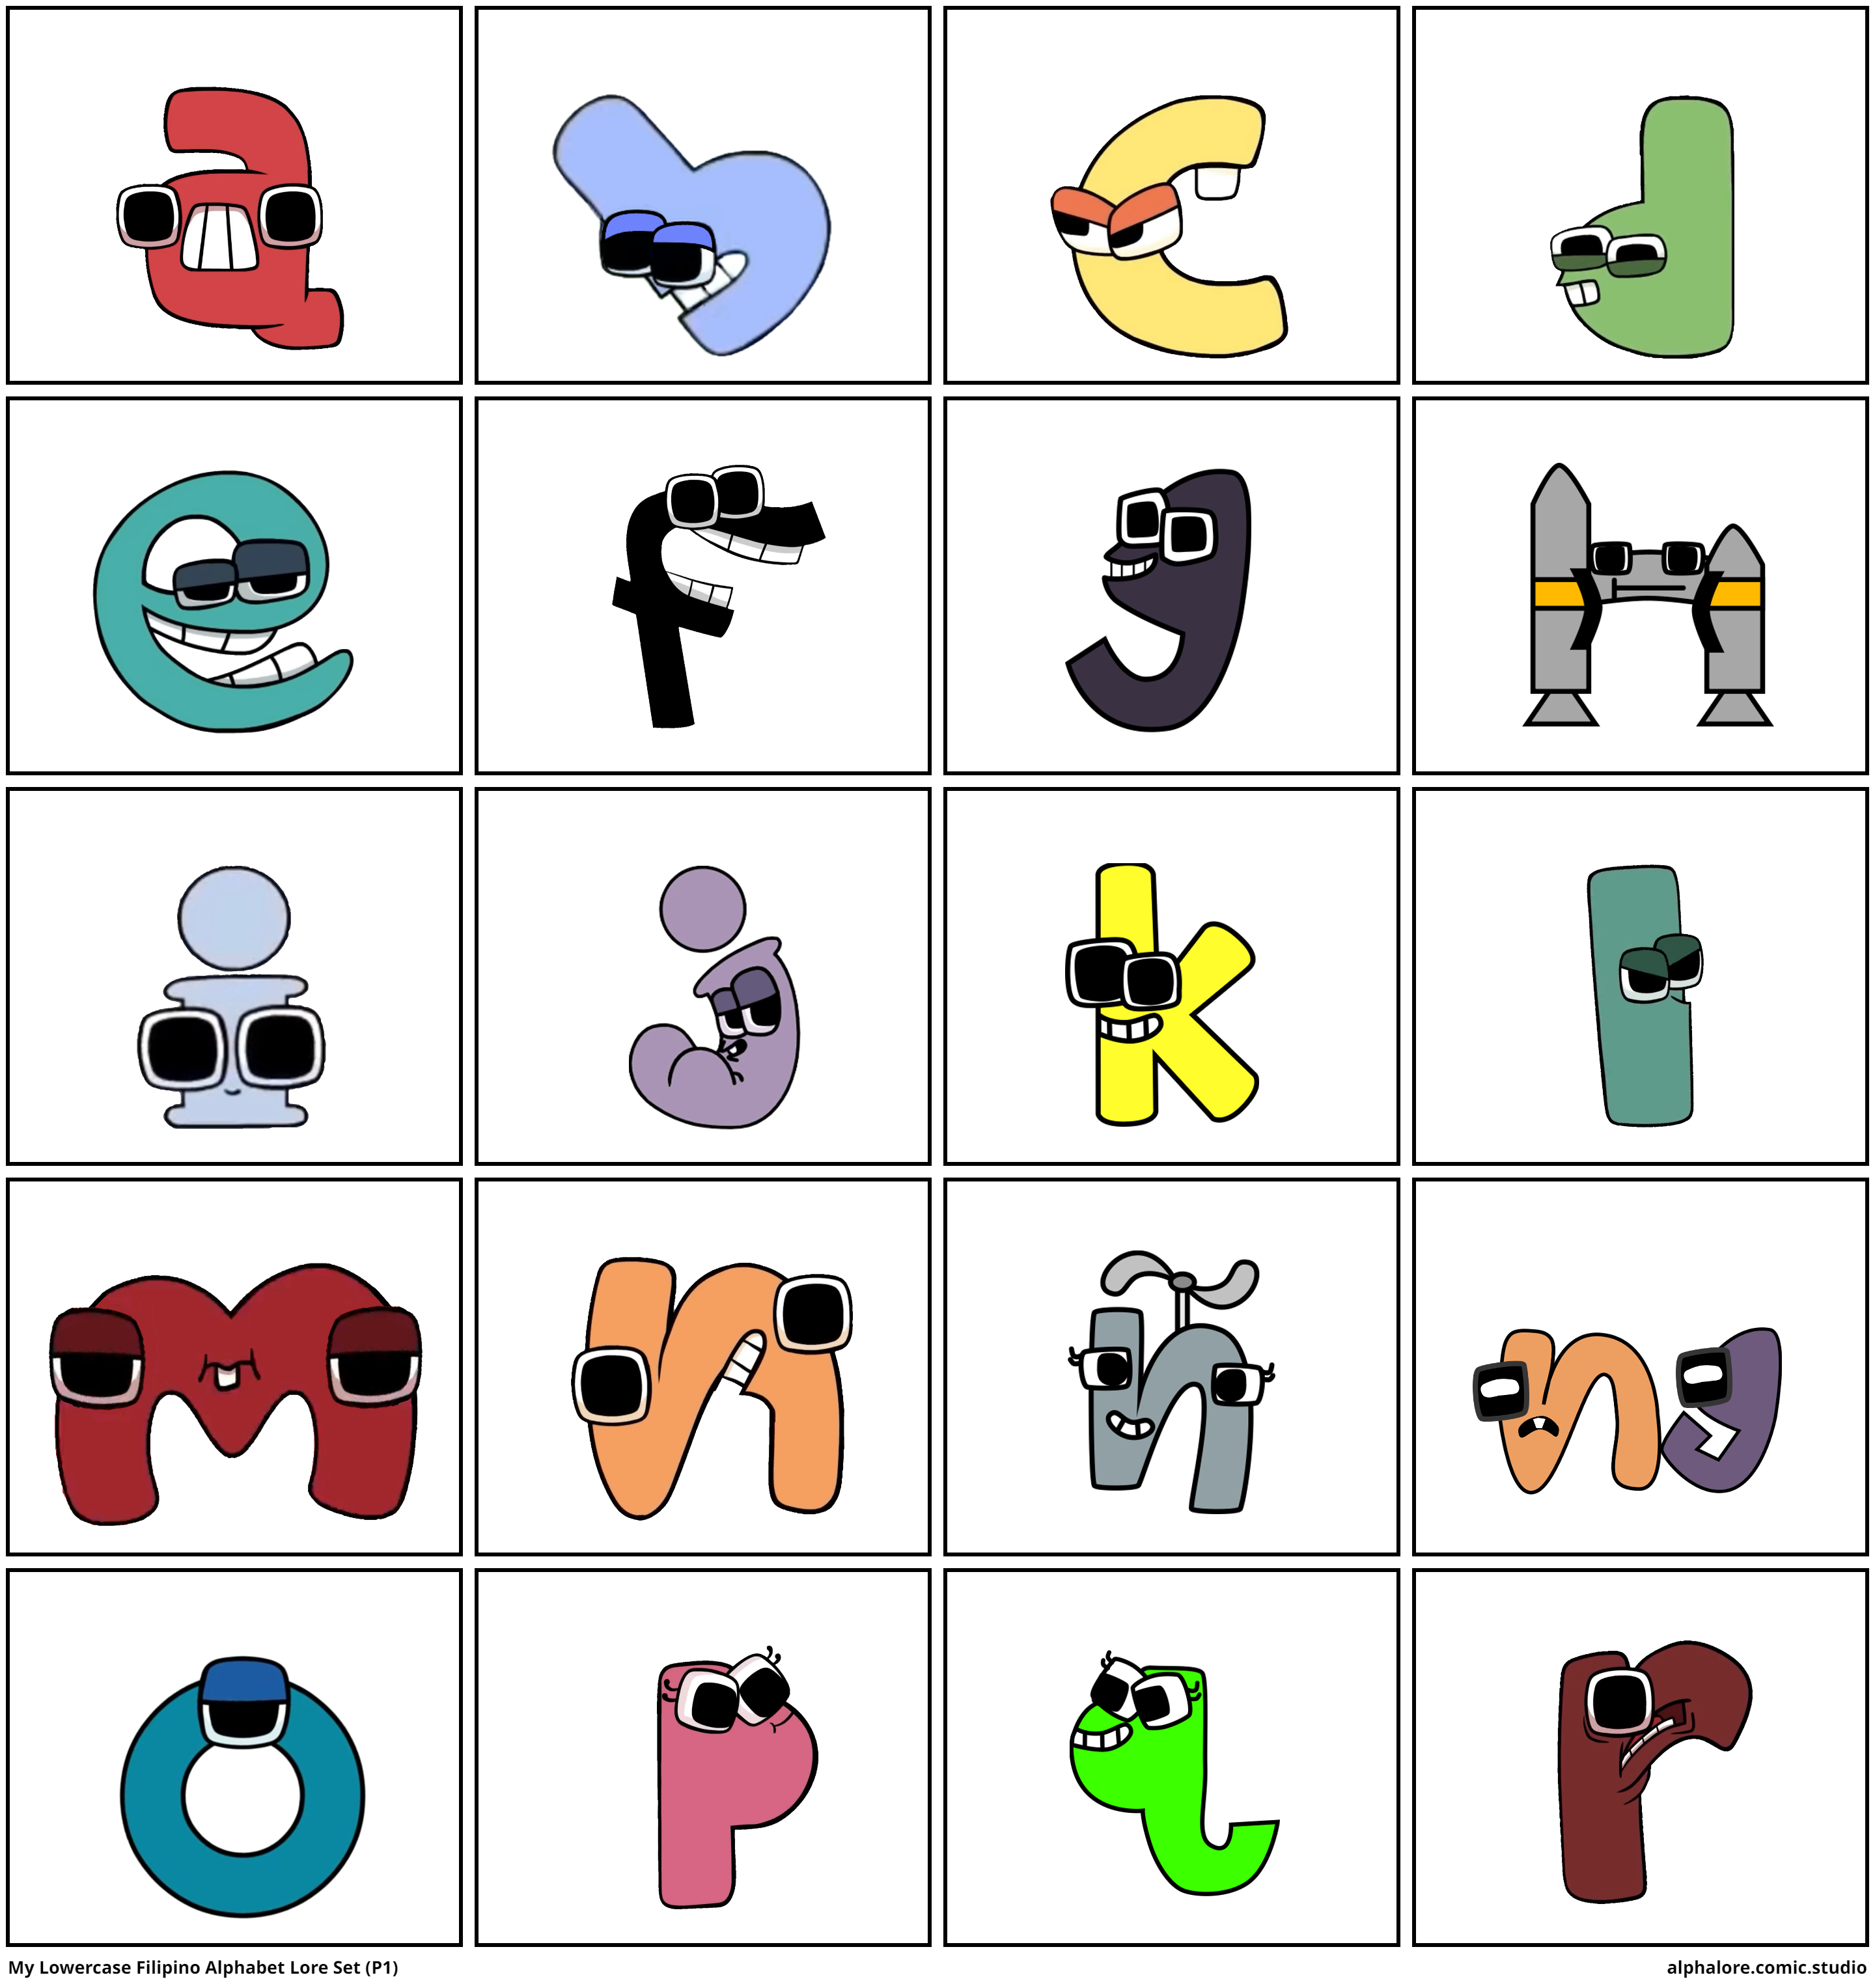 My Lowercase Filipino Alphabet Lore Set (P1)